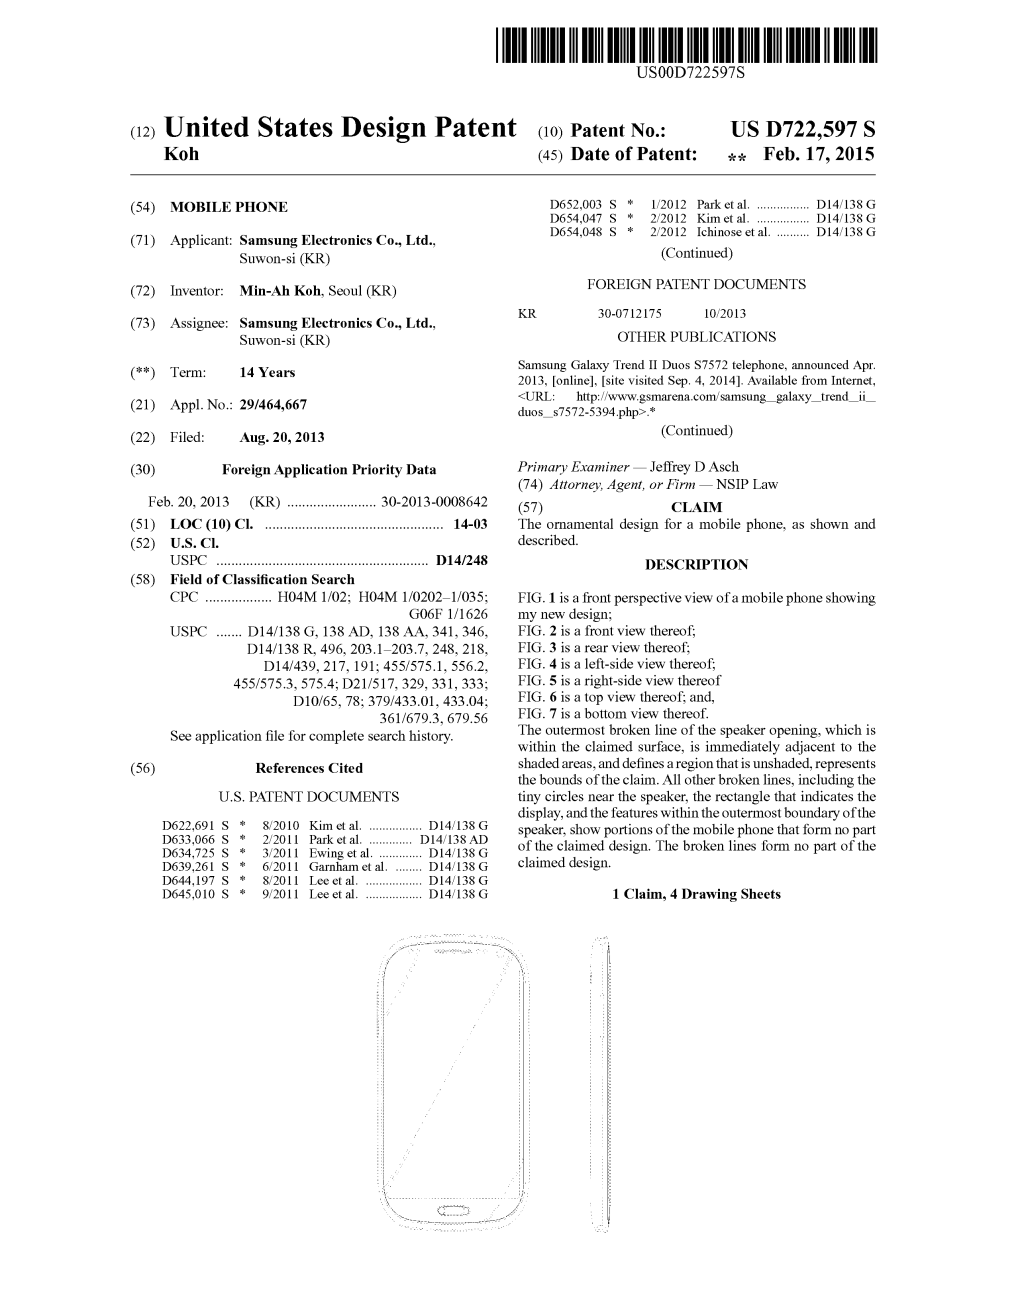 (12) United States Design Patent (10) Patent No.: US D722,597 S Koh (45) Date of Patent: Feb